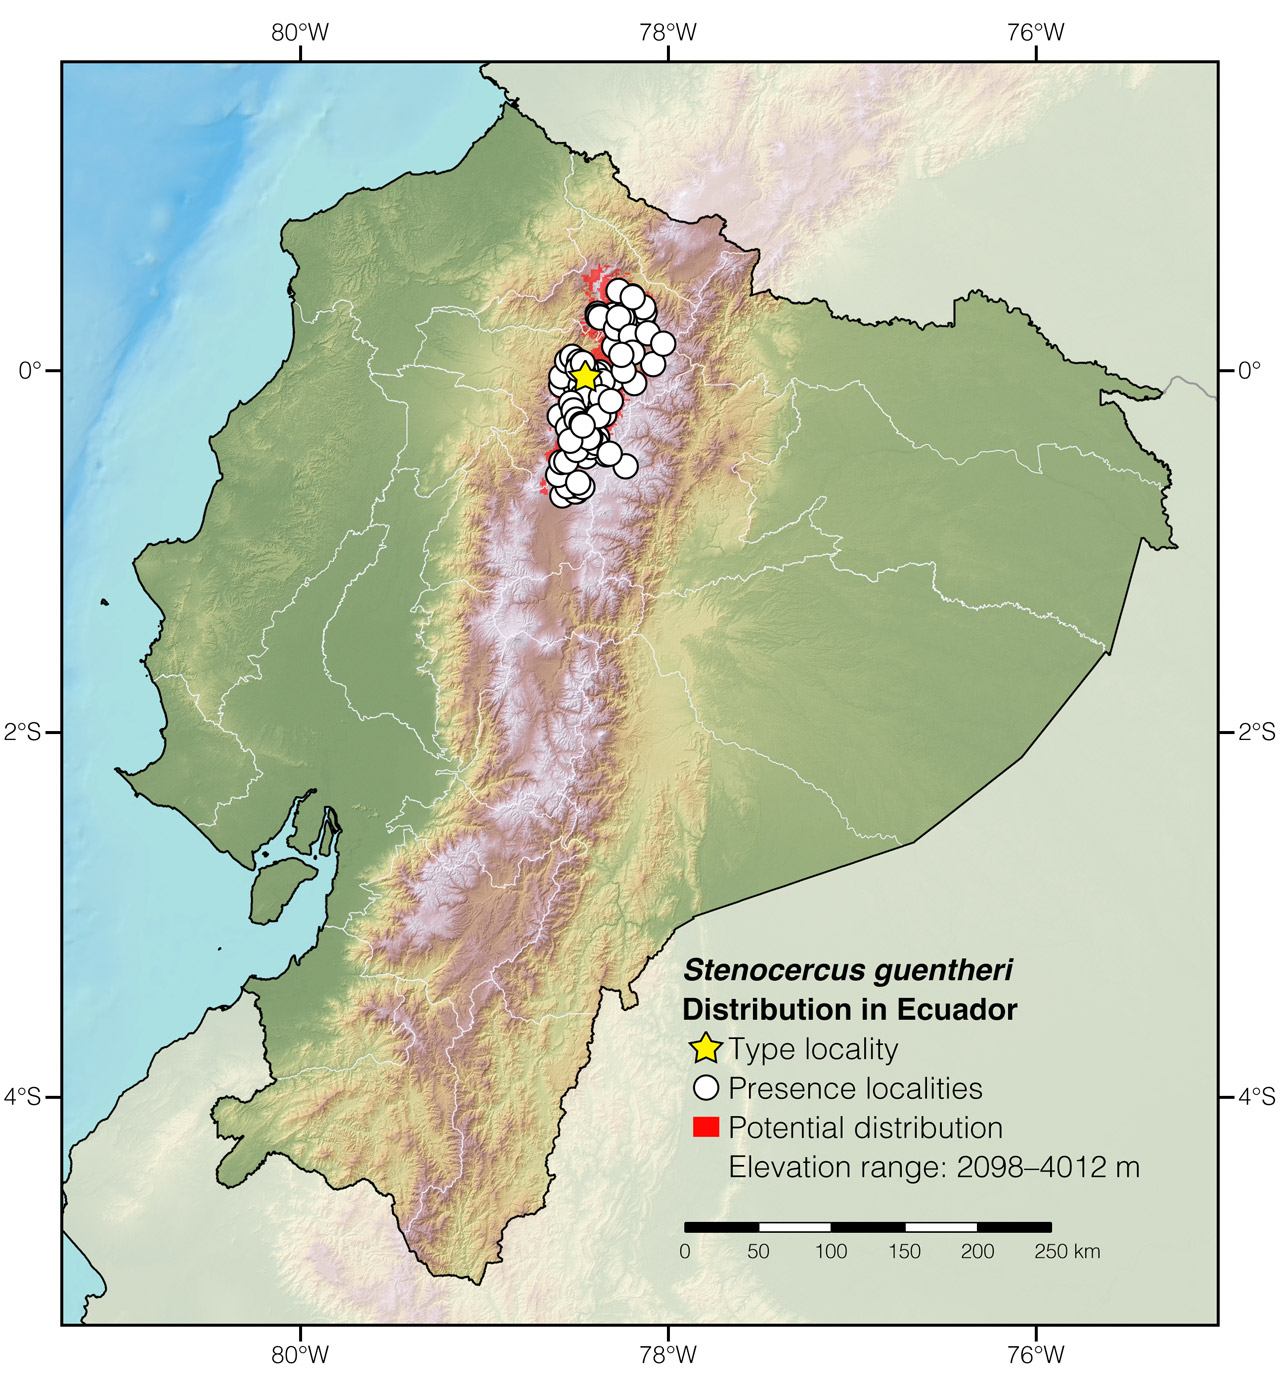 Distribution of Stenocercus guentheri in Ecuador